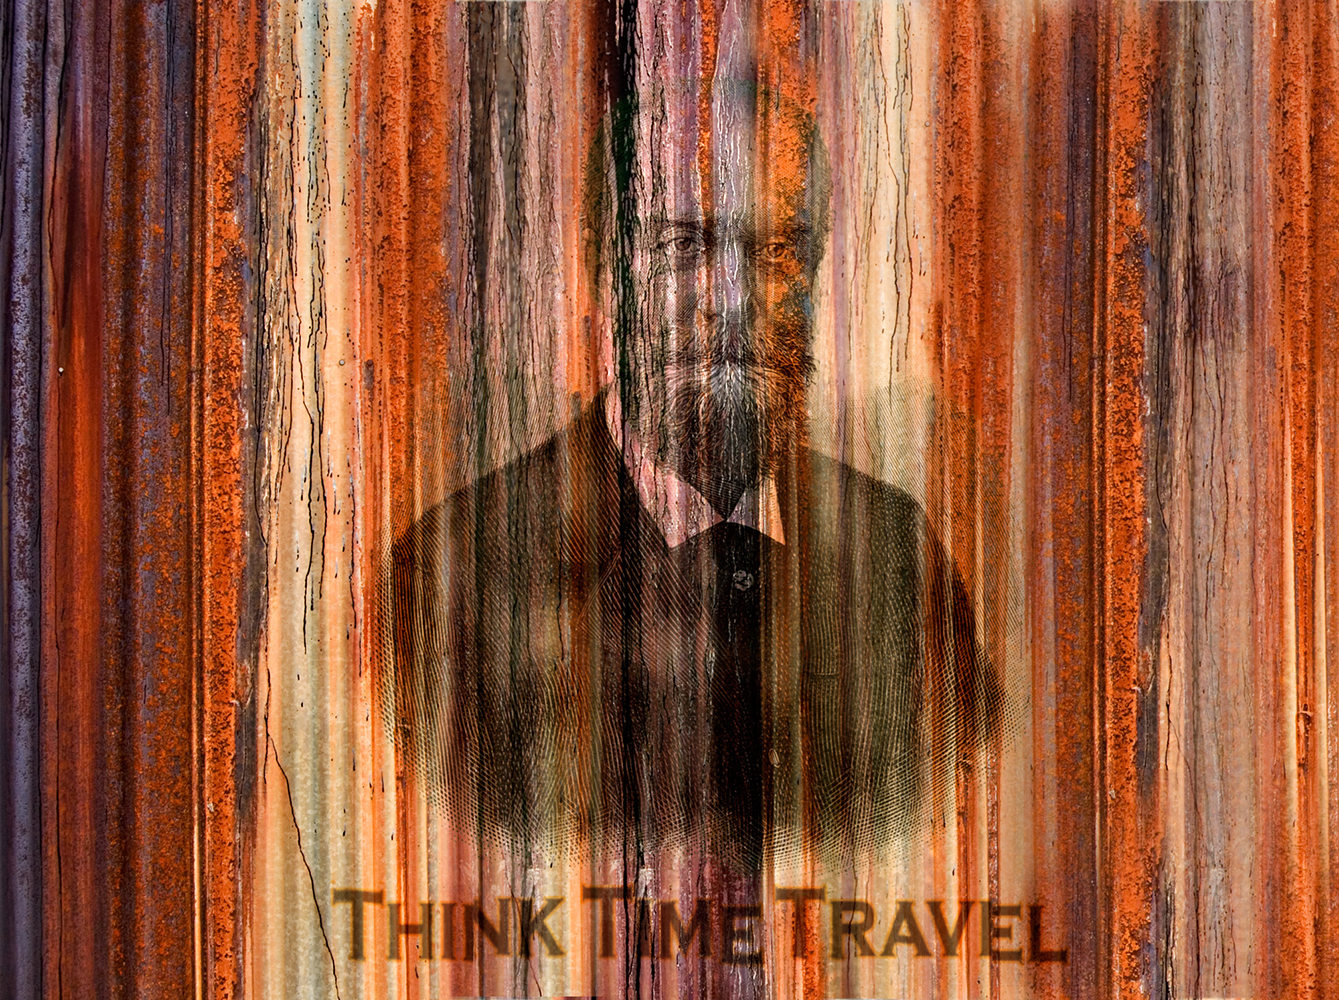 Think-Travel-2.jpg